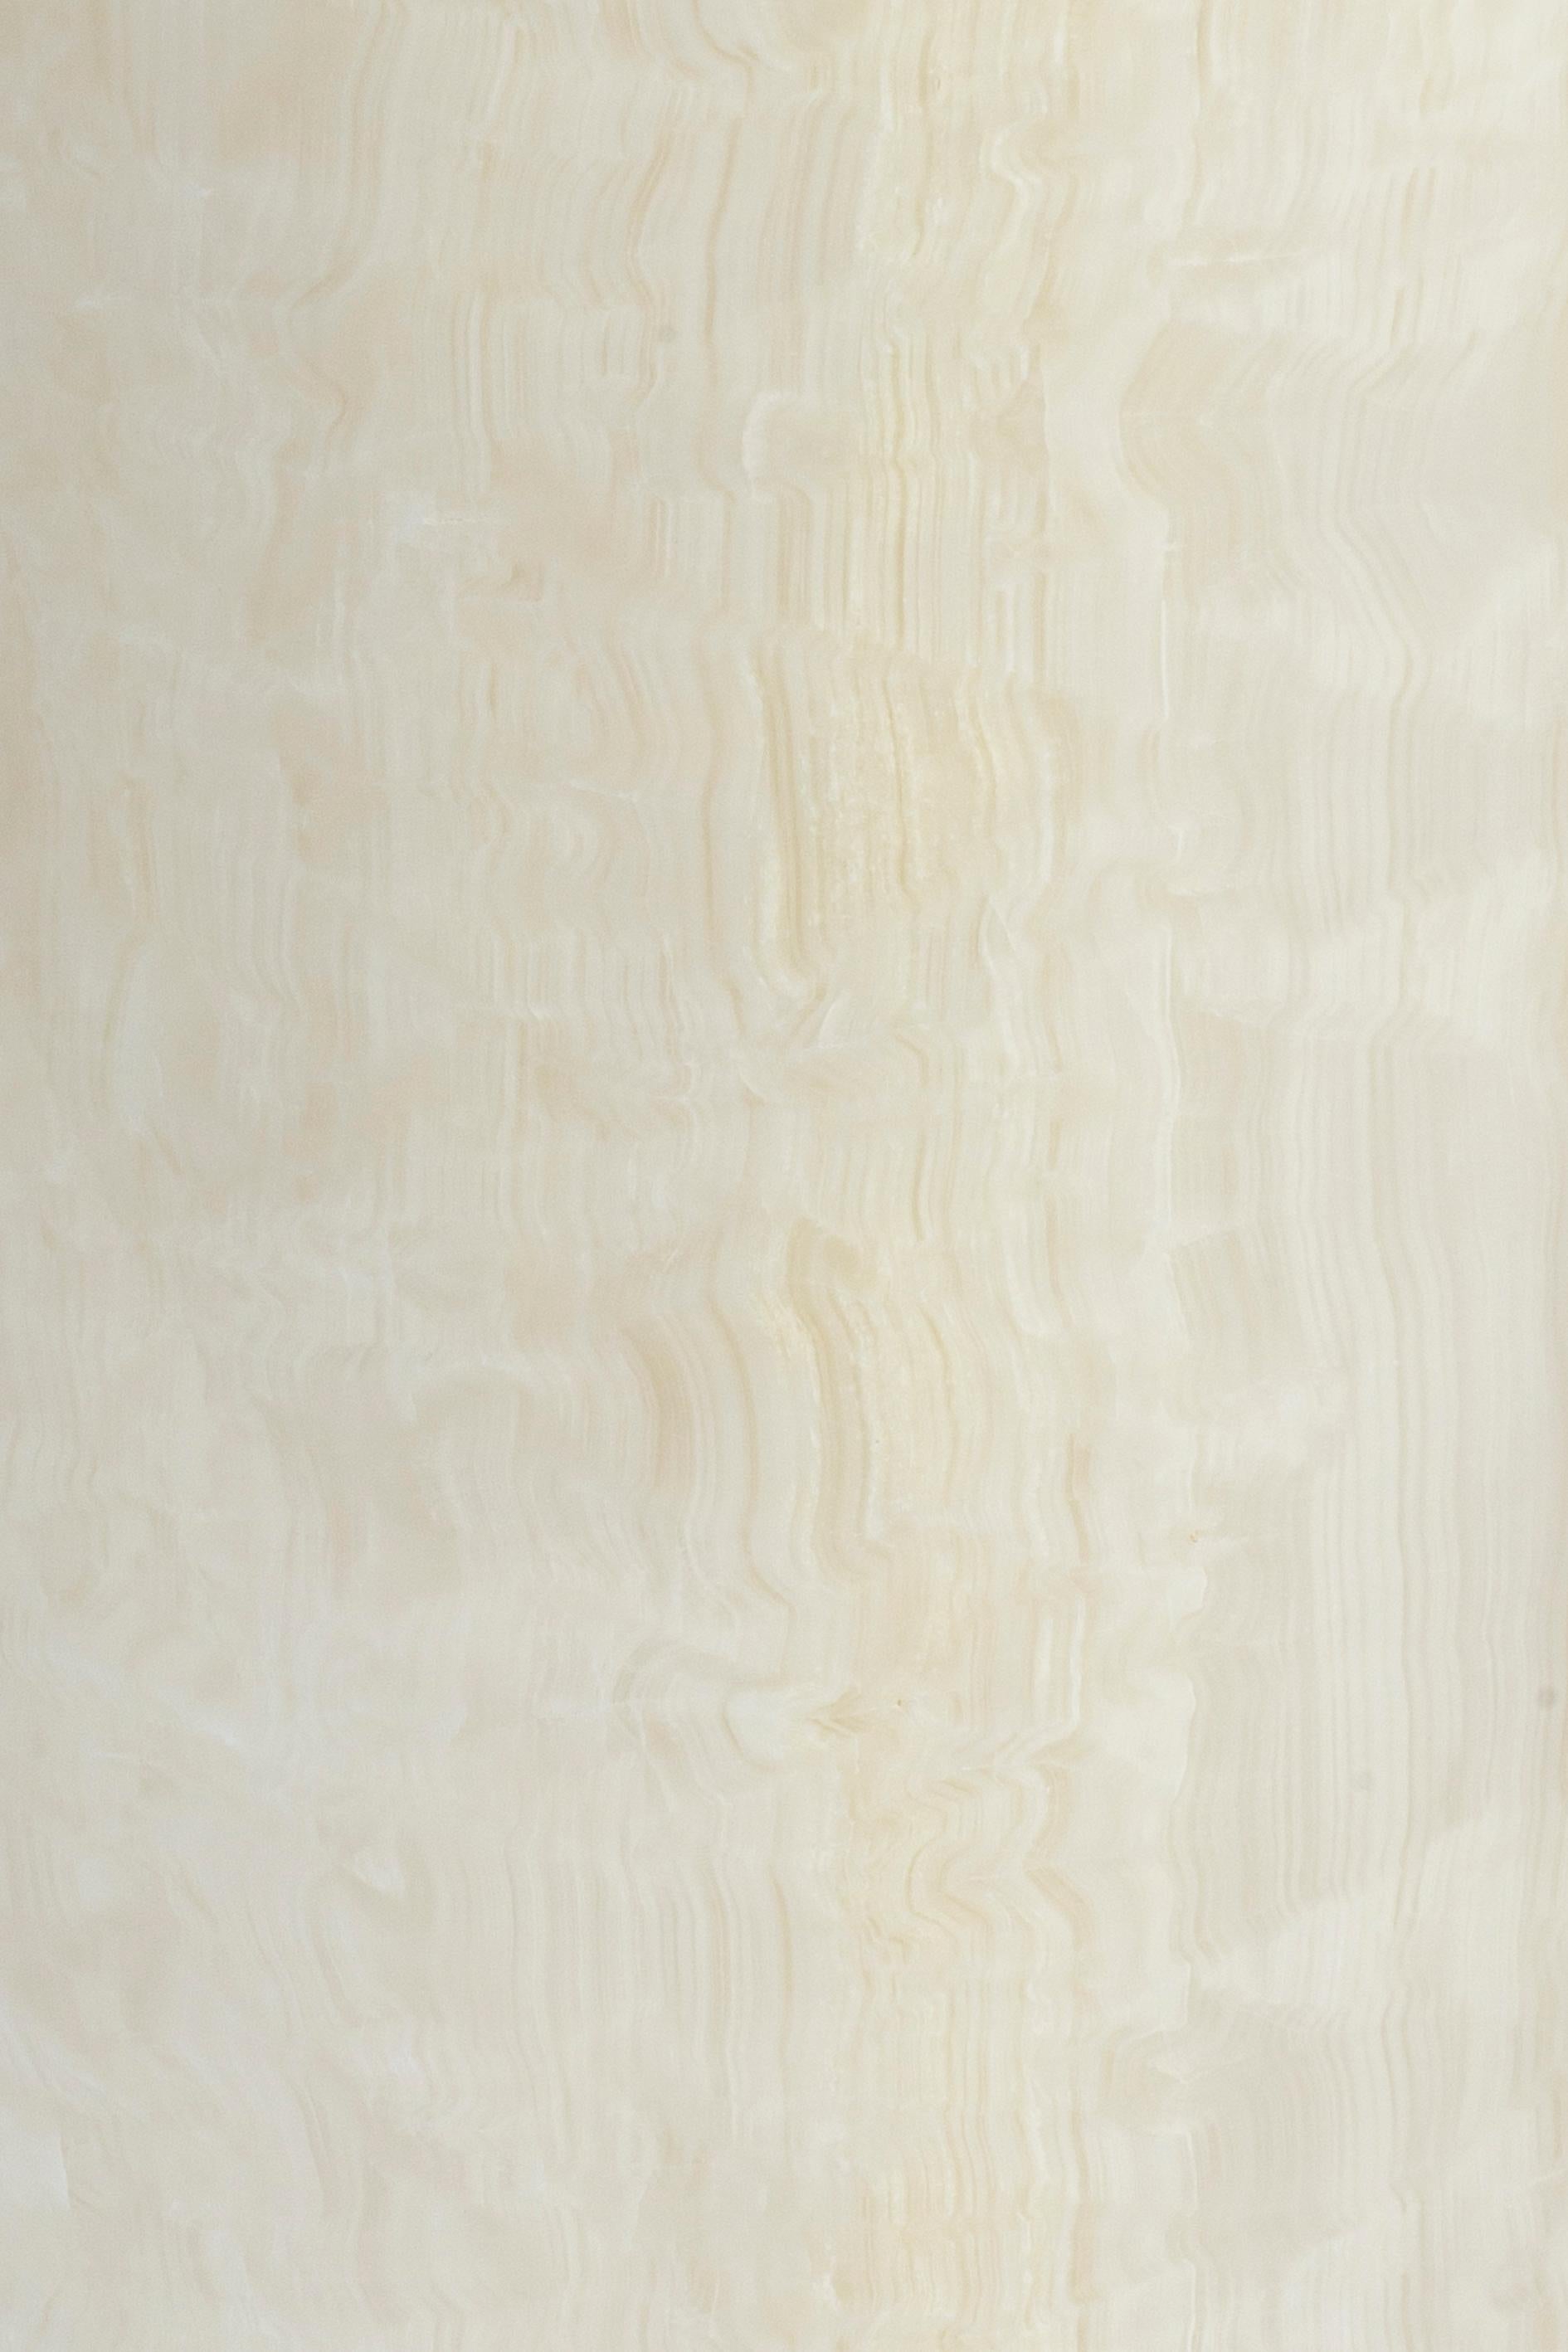 Contemporary New Modern Side Table in White Onyx Marble, Creator  Karen Chekerdjian Stock For Sale